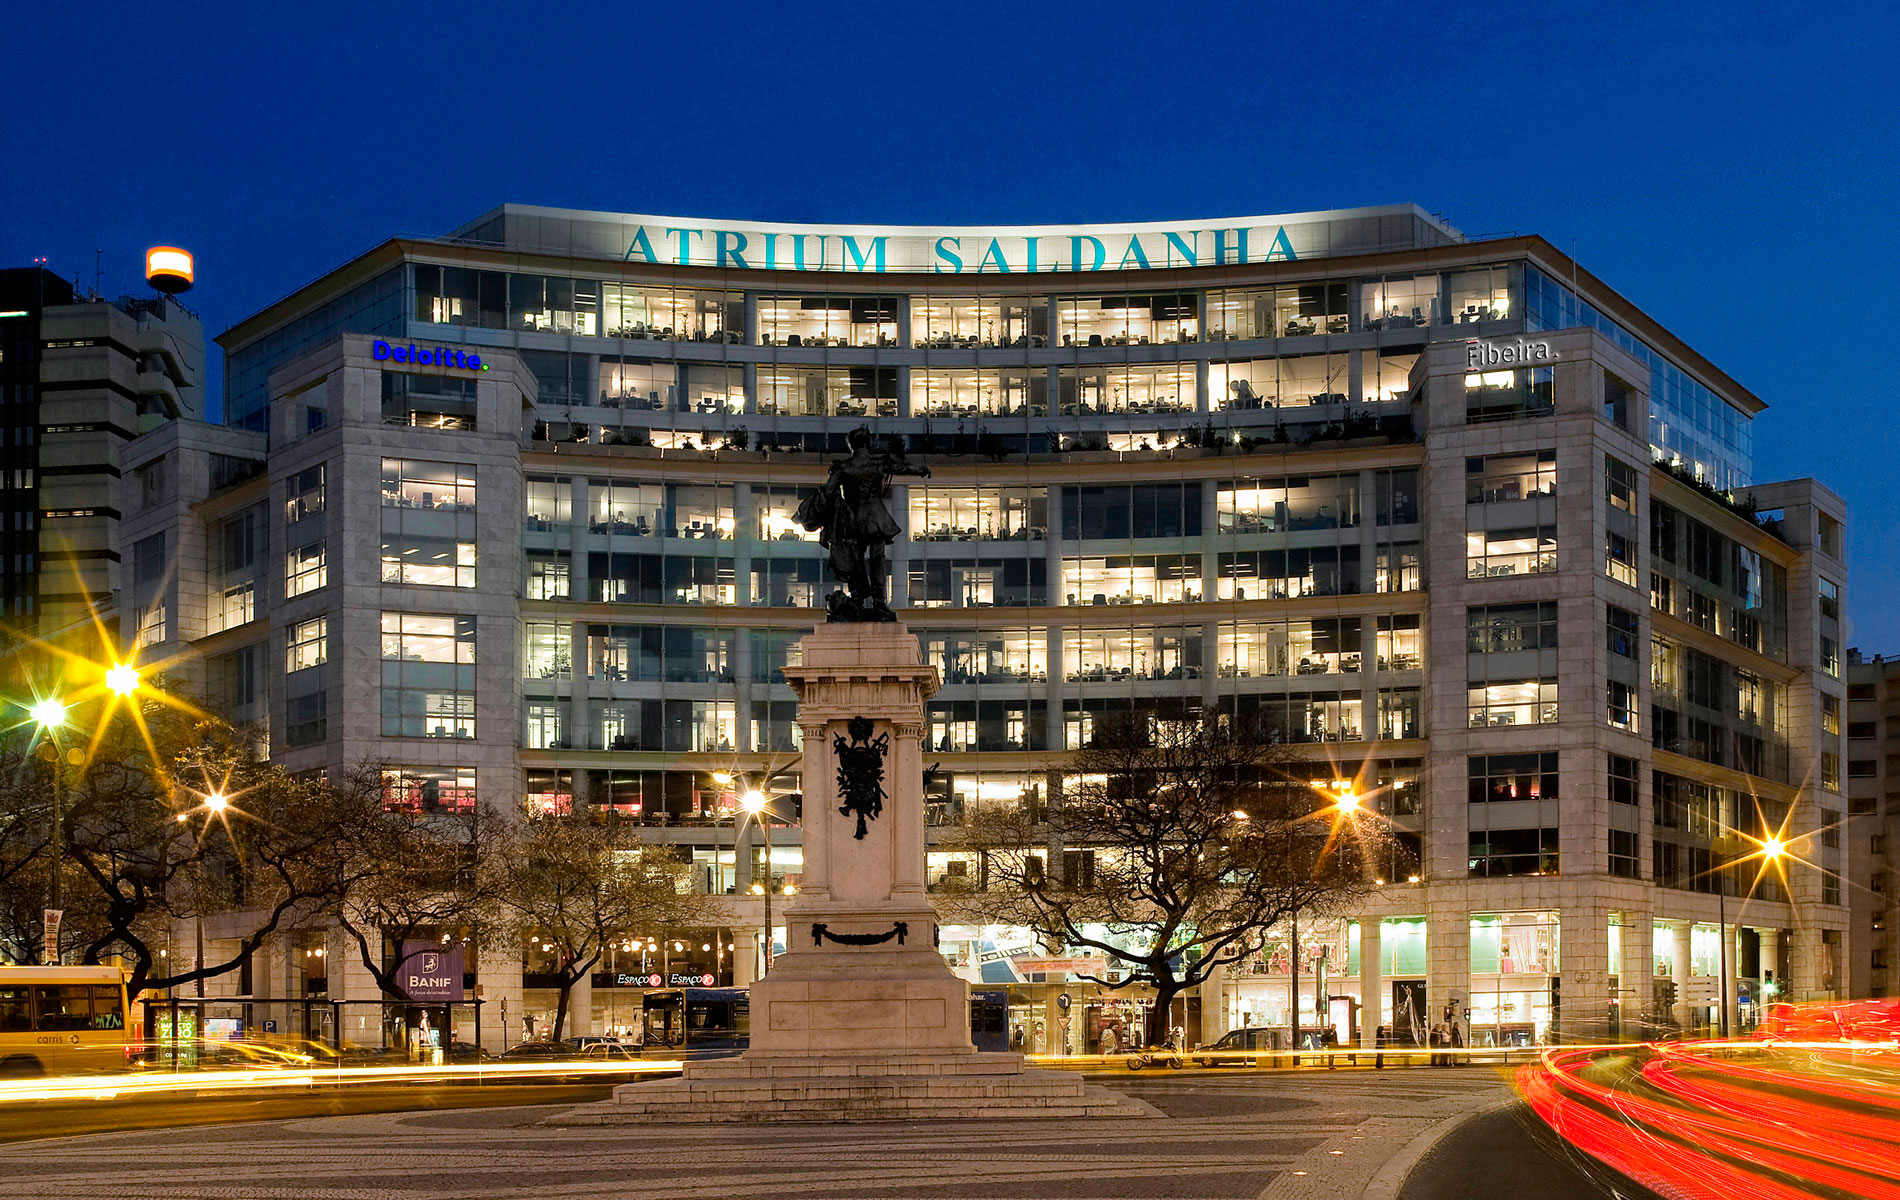 Atrium Saldanha - 3 floors Shopping Center - Lisbon financial district